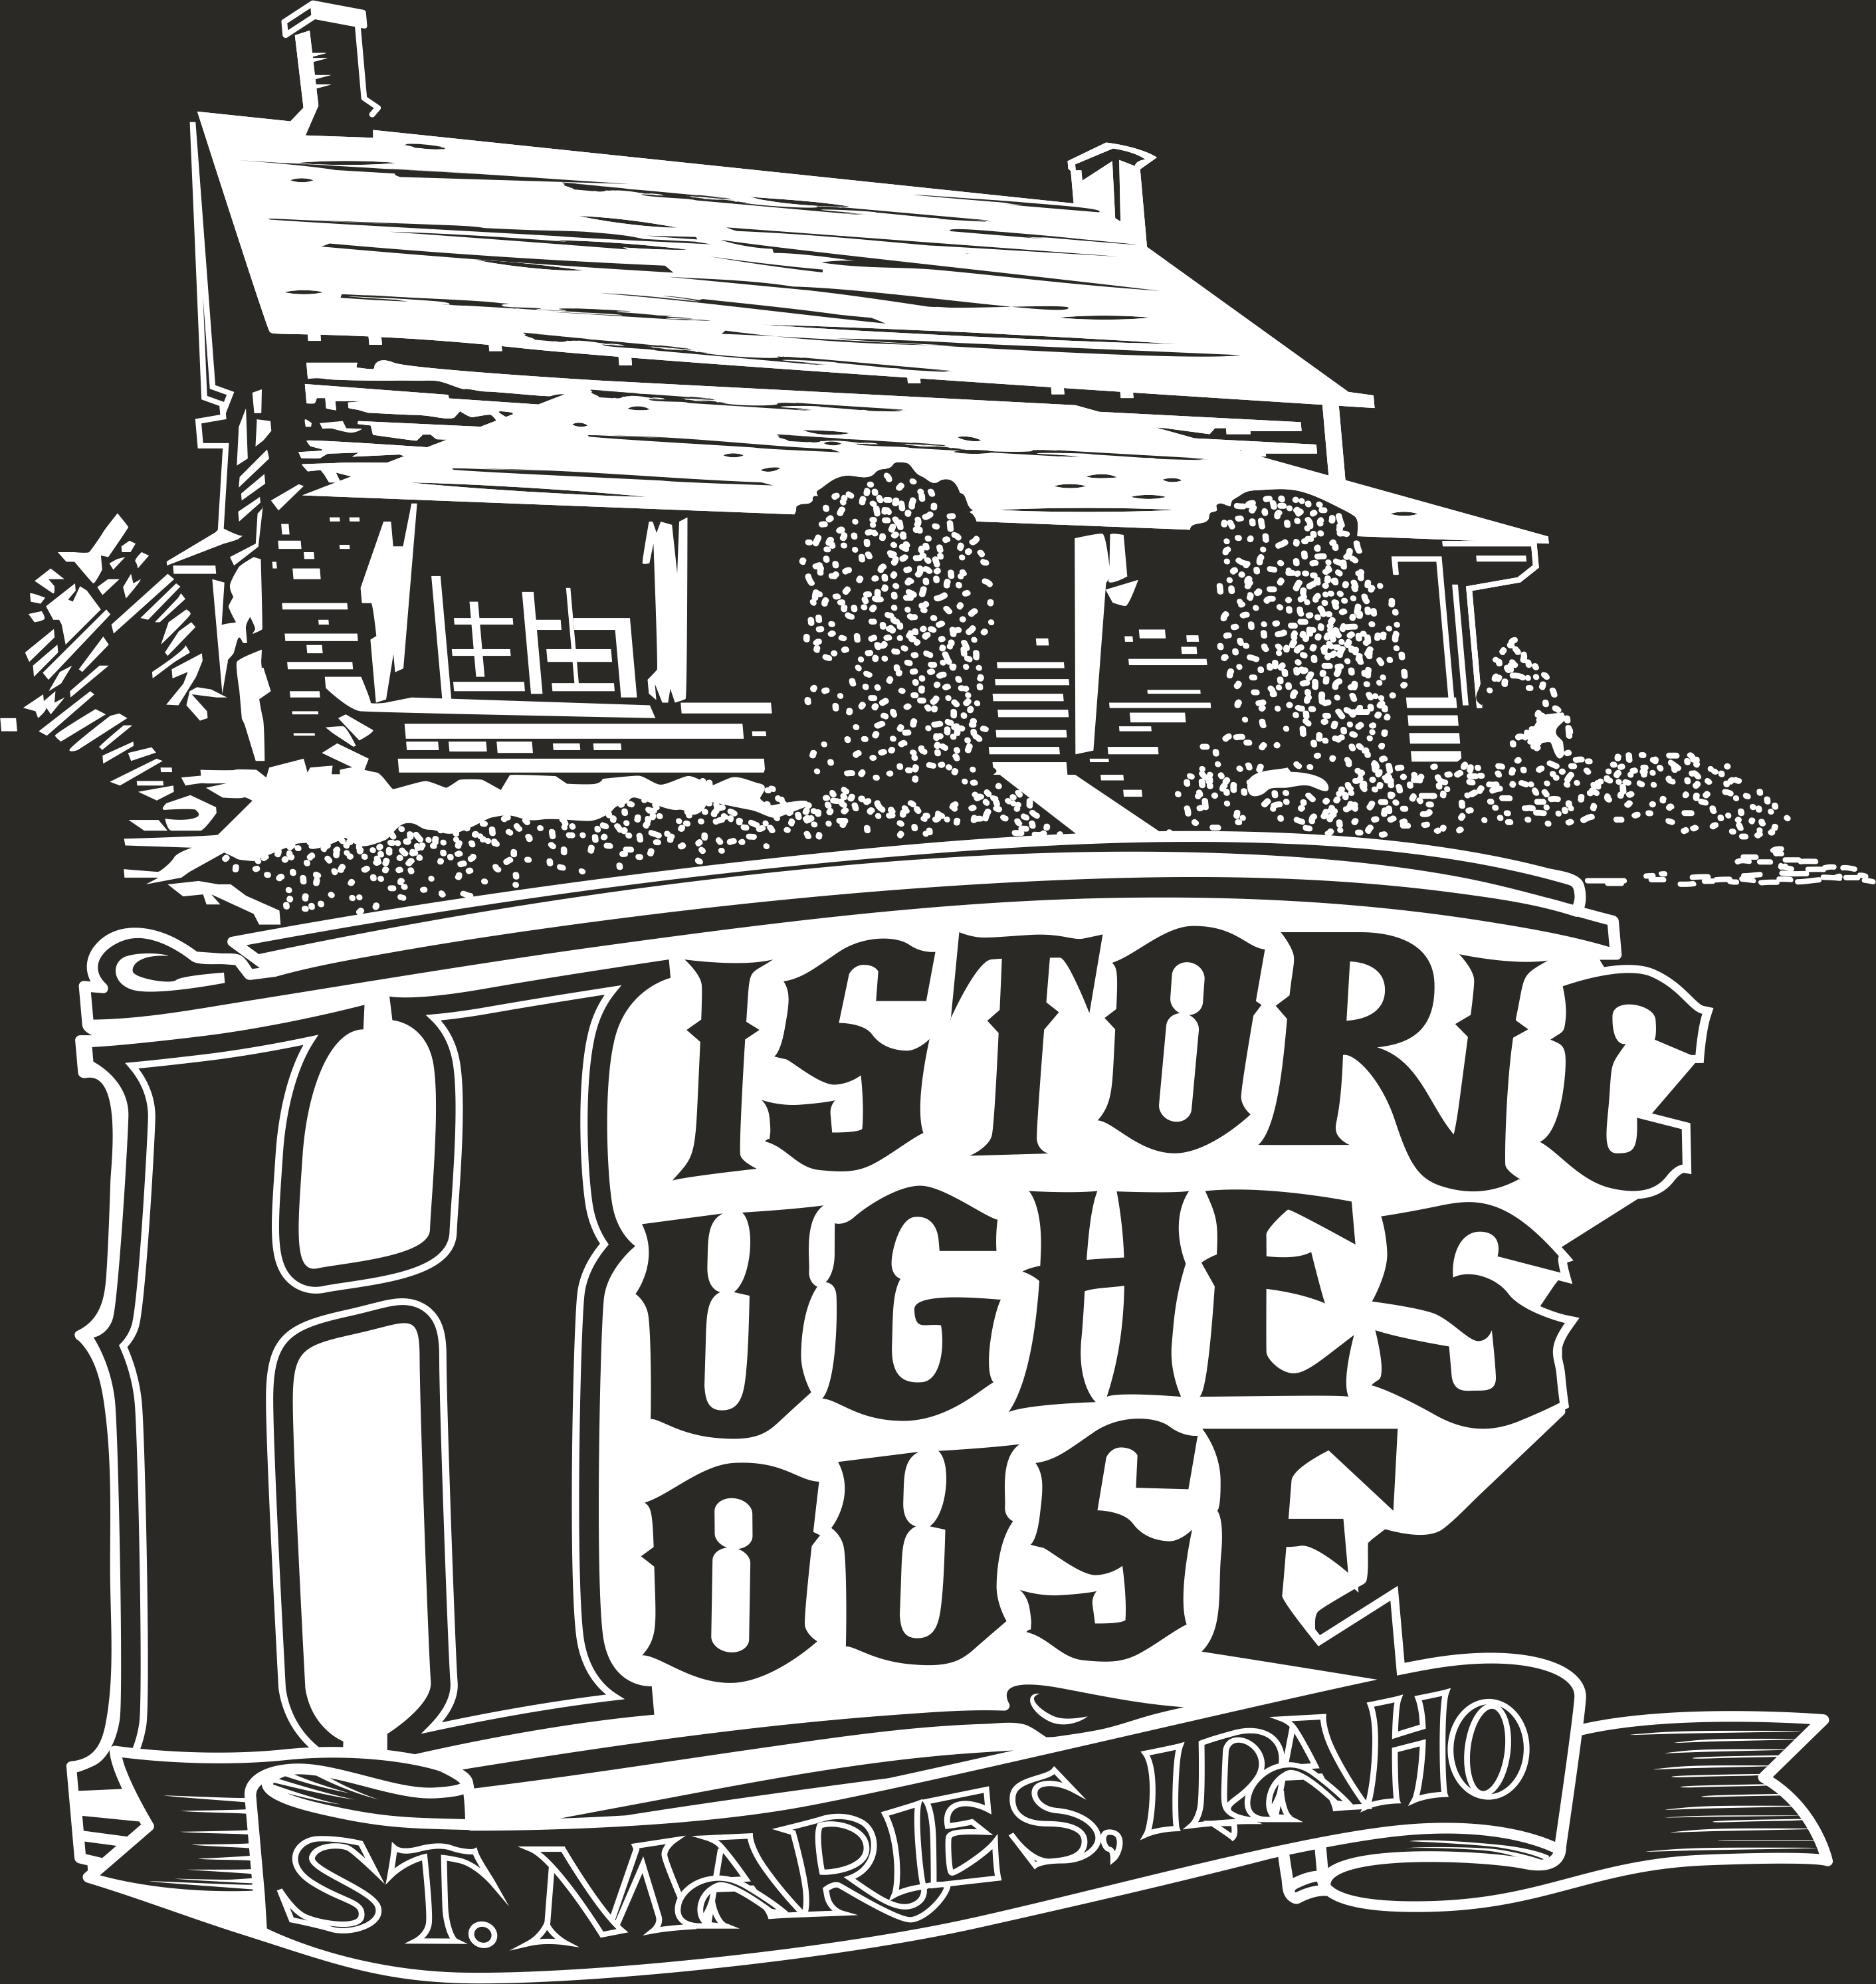 Hughes Historical Society